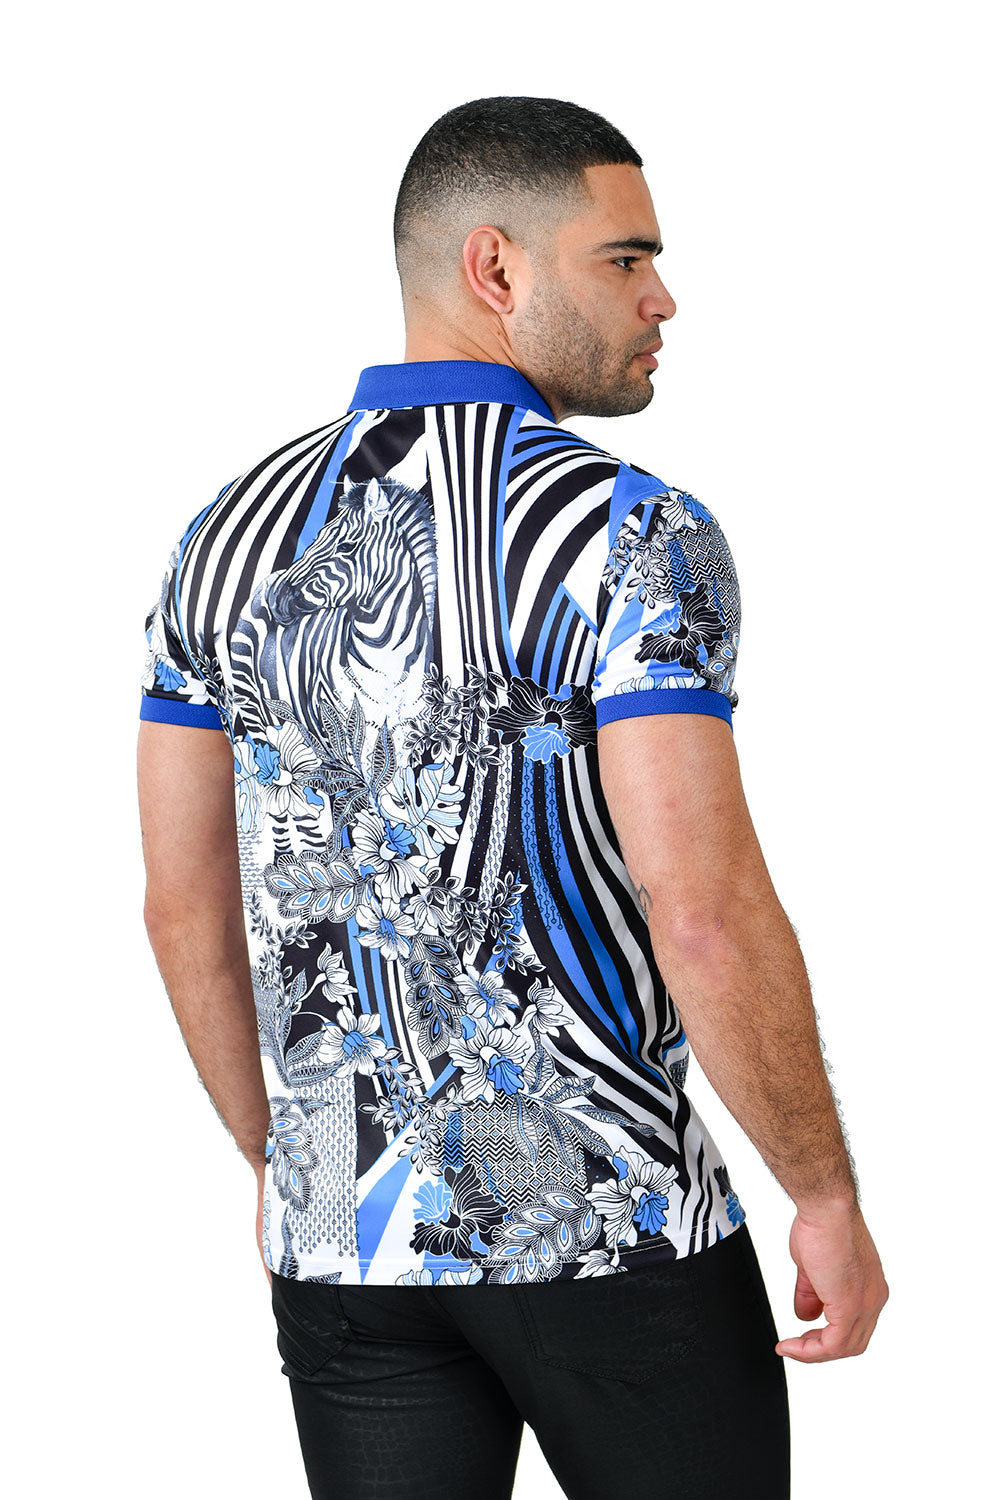 Barabas men's printed zebra floral striped polo shirts PSP2013